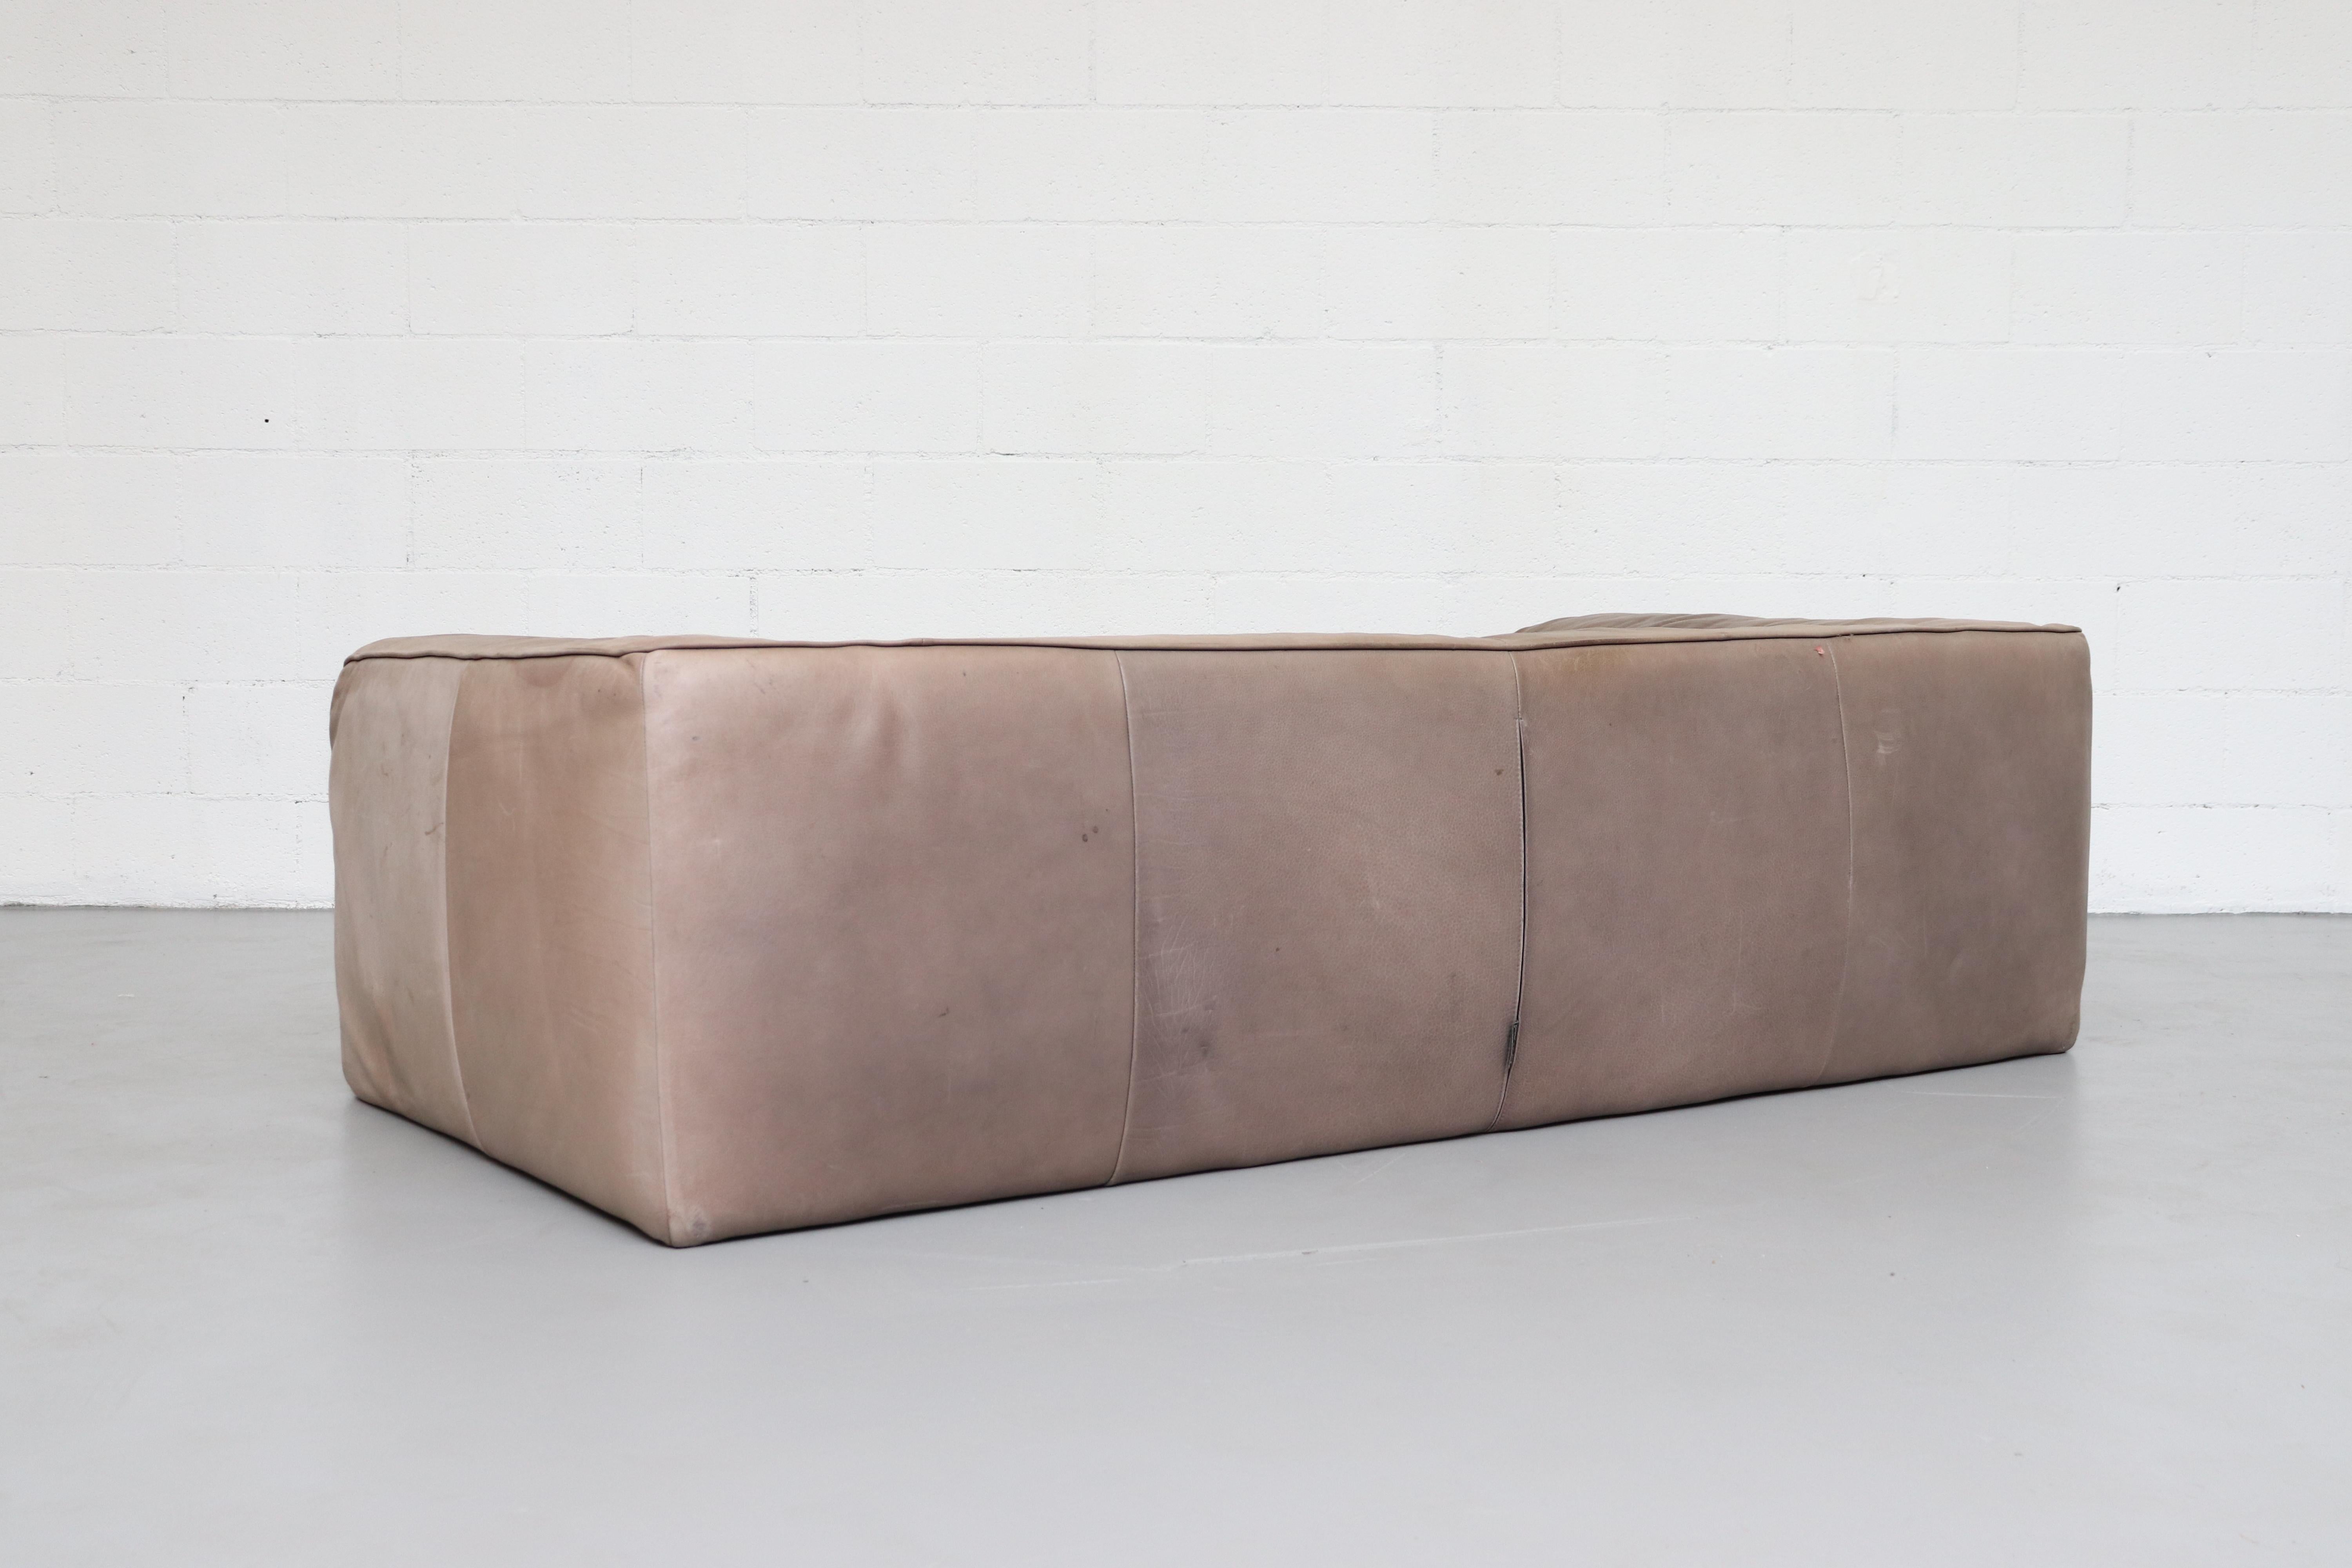 Late 20th Century Gerard Van Den Berg Soft Form Leather Sofa and Ottoman